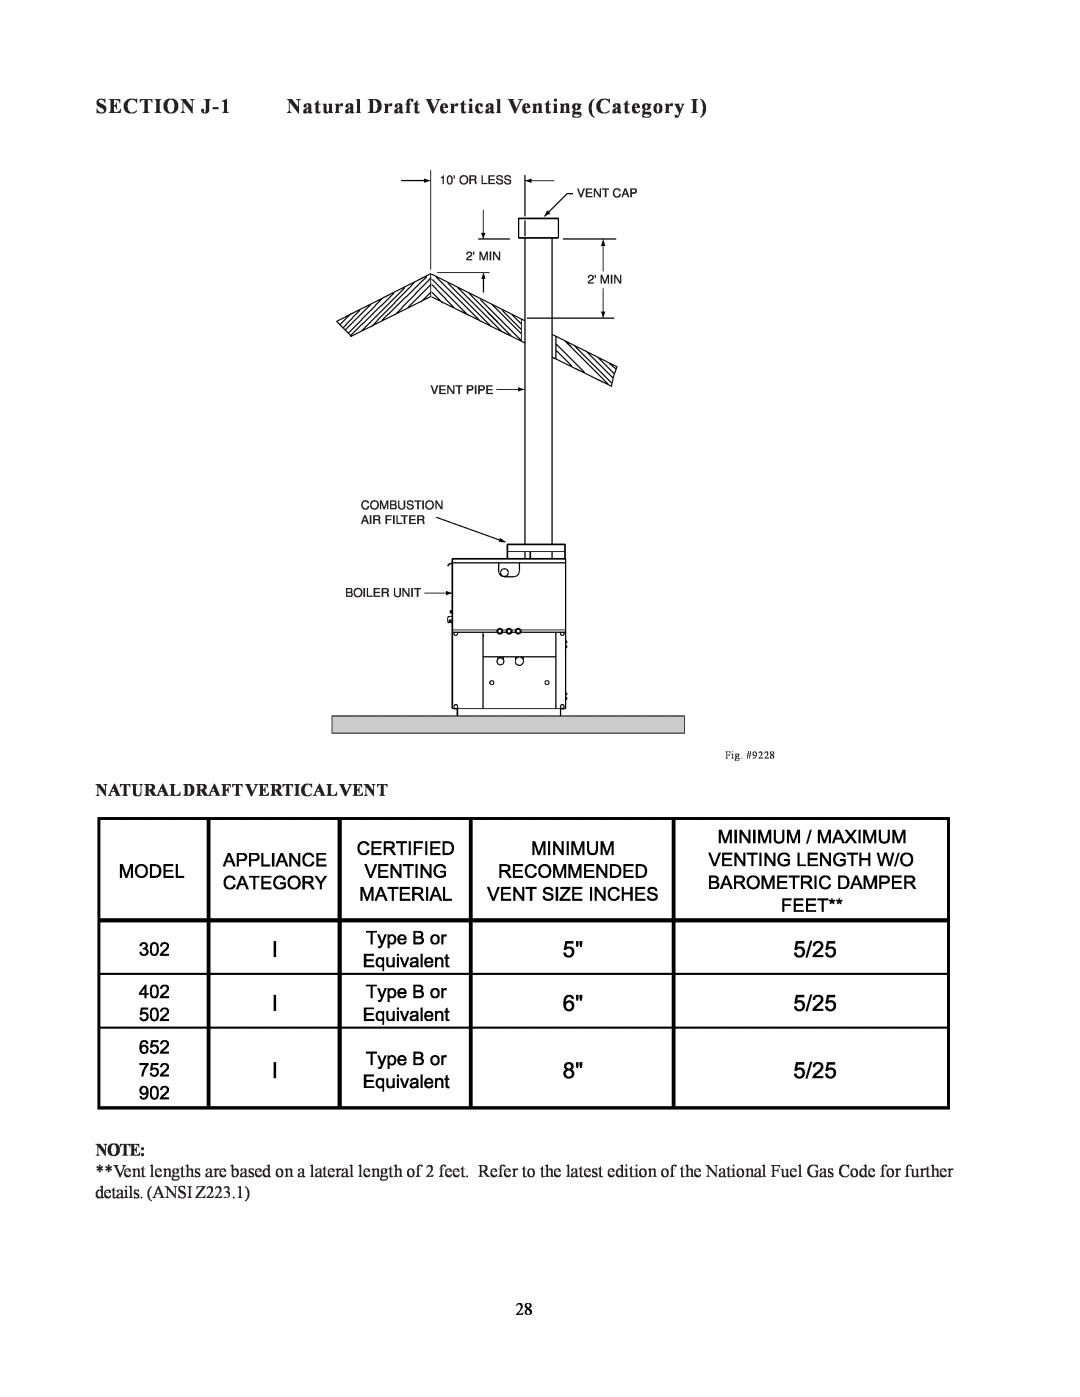 Raypak 302-902 manual Natural Draft Verticalvent, OR LESS VENT CAP 2 MIN 2 MIN VENT PIPE, Combustion Air Filter Boiler Unit 